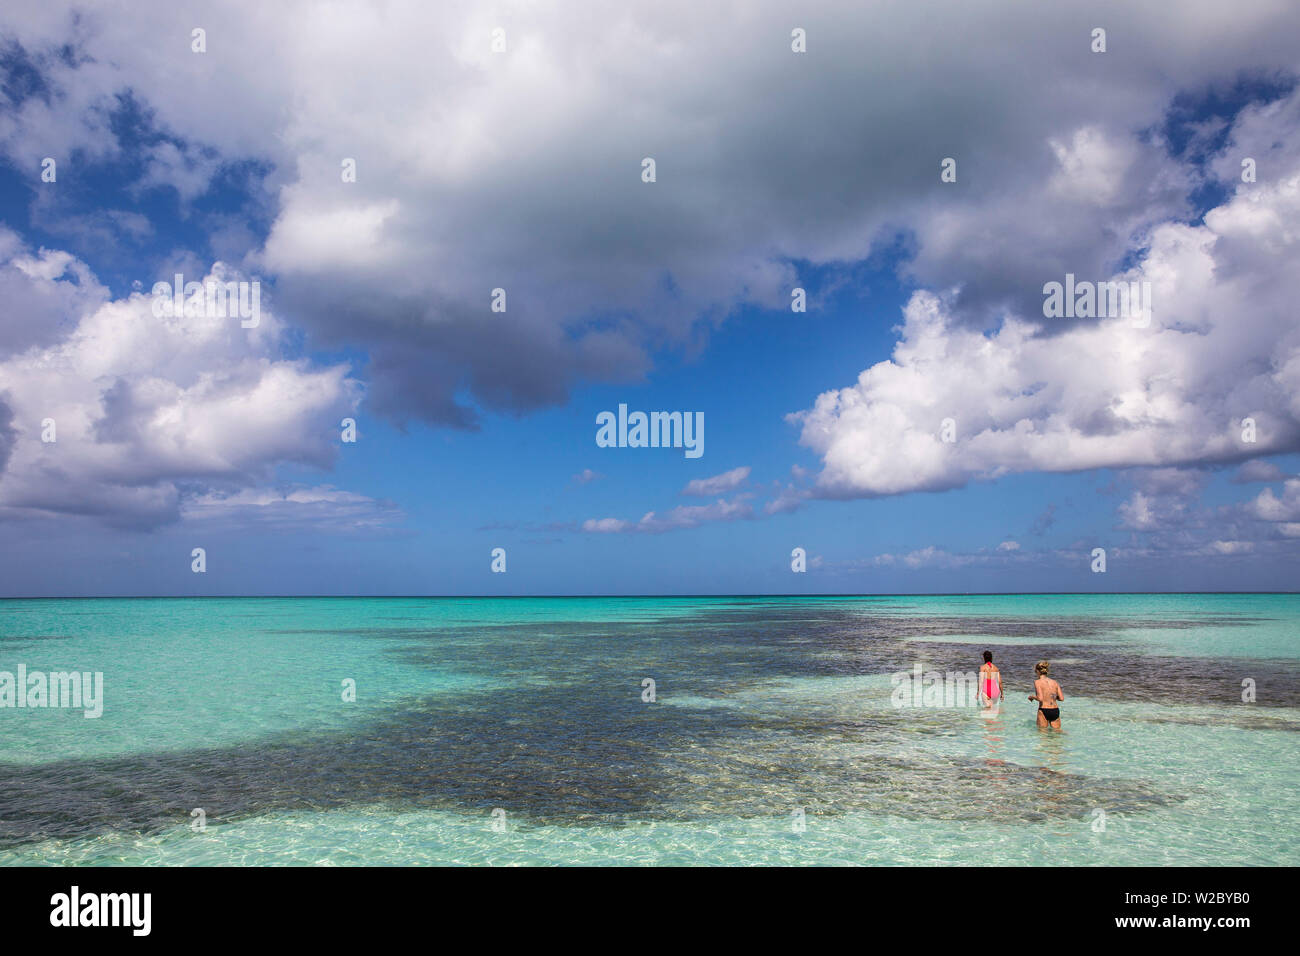 Dominican Republic, Punta Cana, Parque Nacional del Este, Piscina natural, a shallow sandbank, Tourists looking at starfish Stock Photo